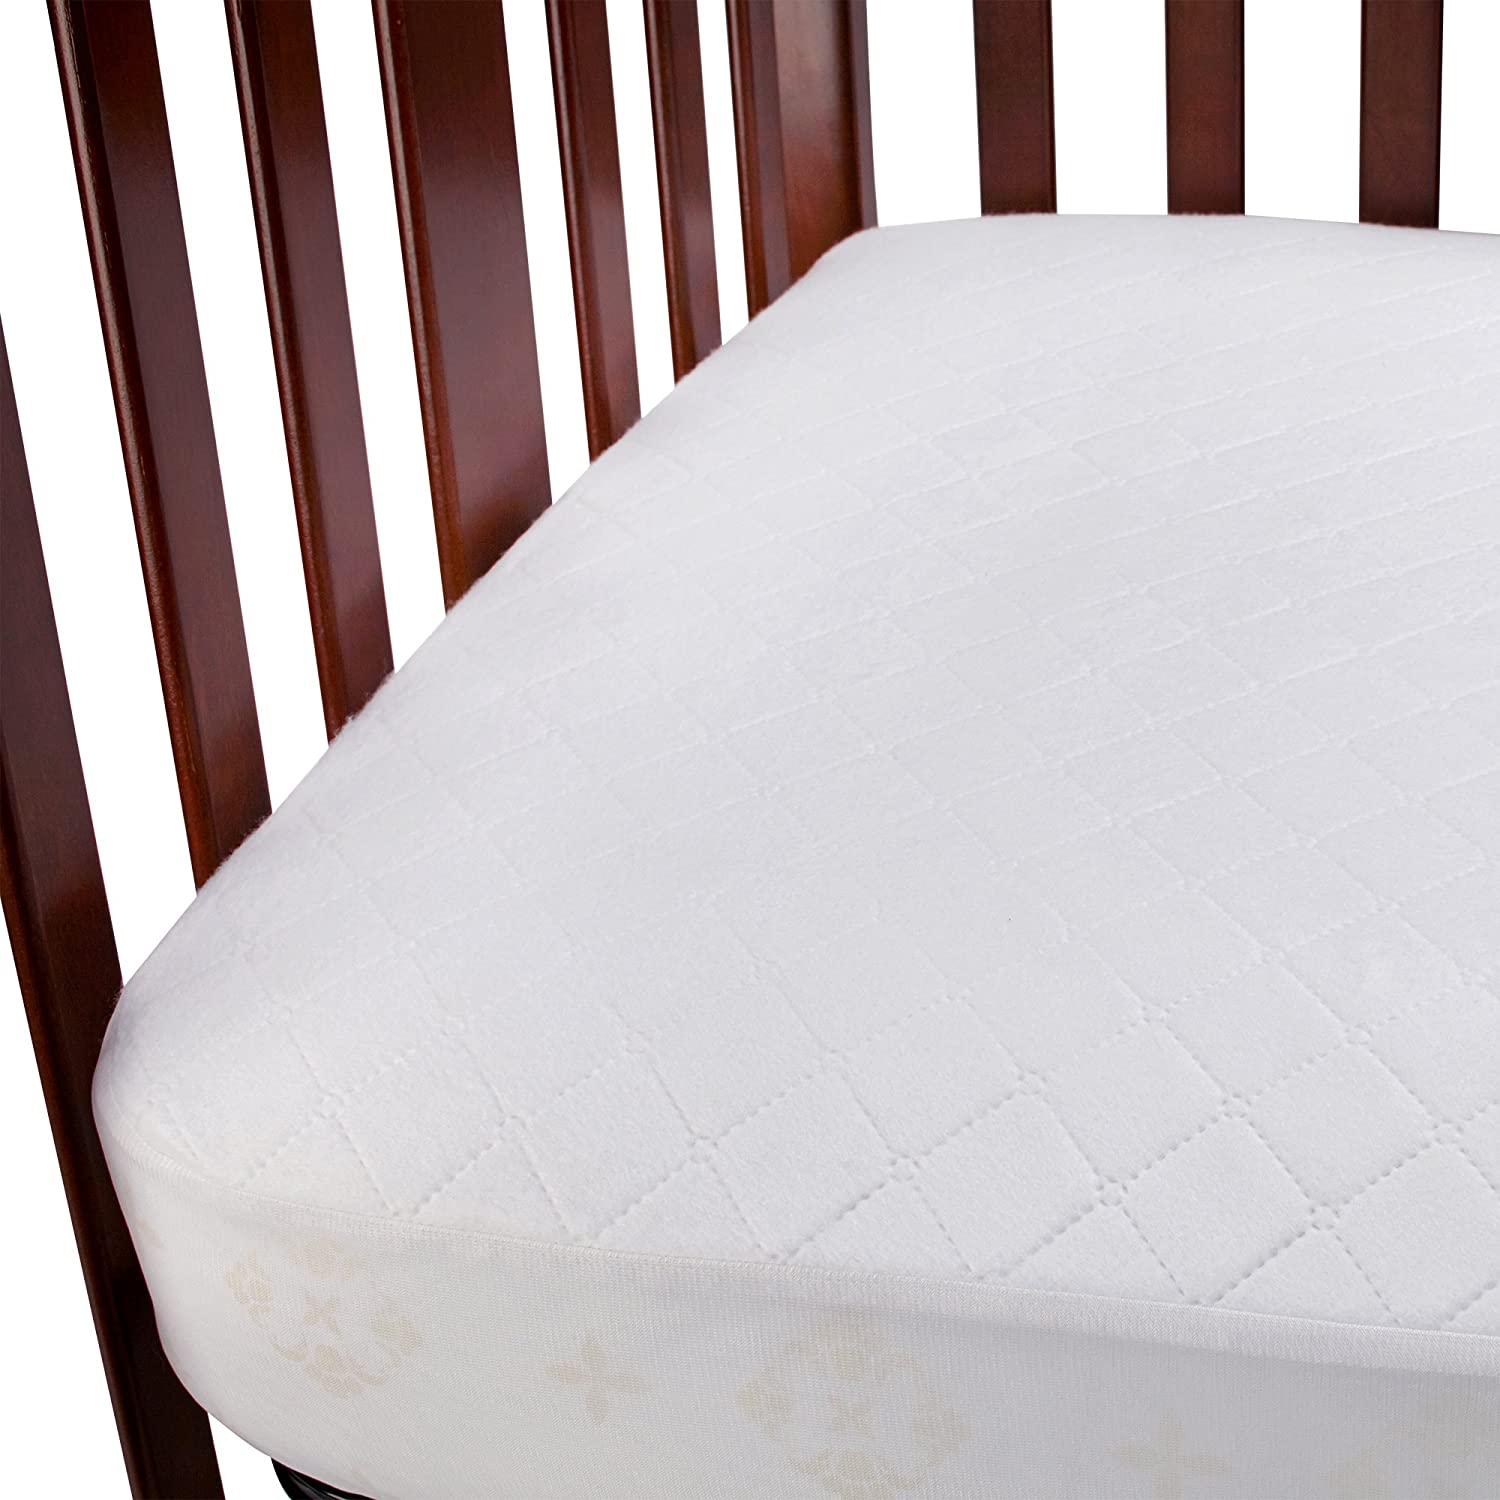 Do I need a waterproof mattress pad for bassinet?